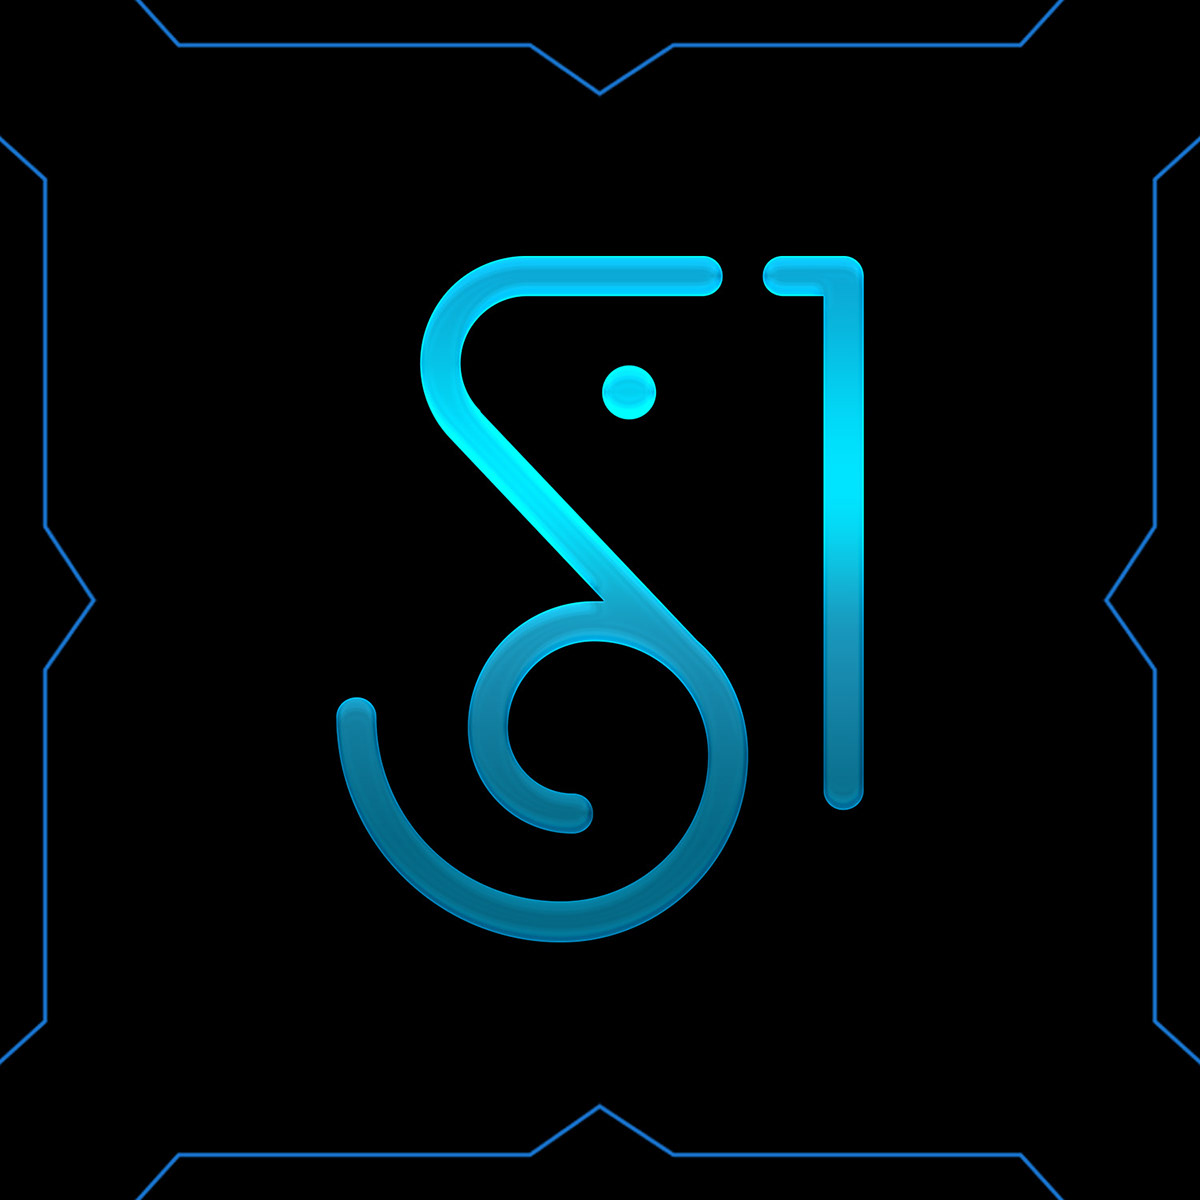 s1 - old - logo
